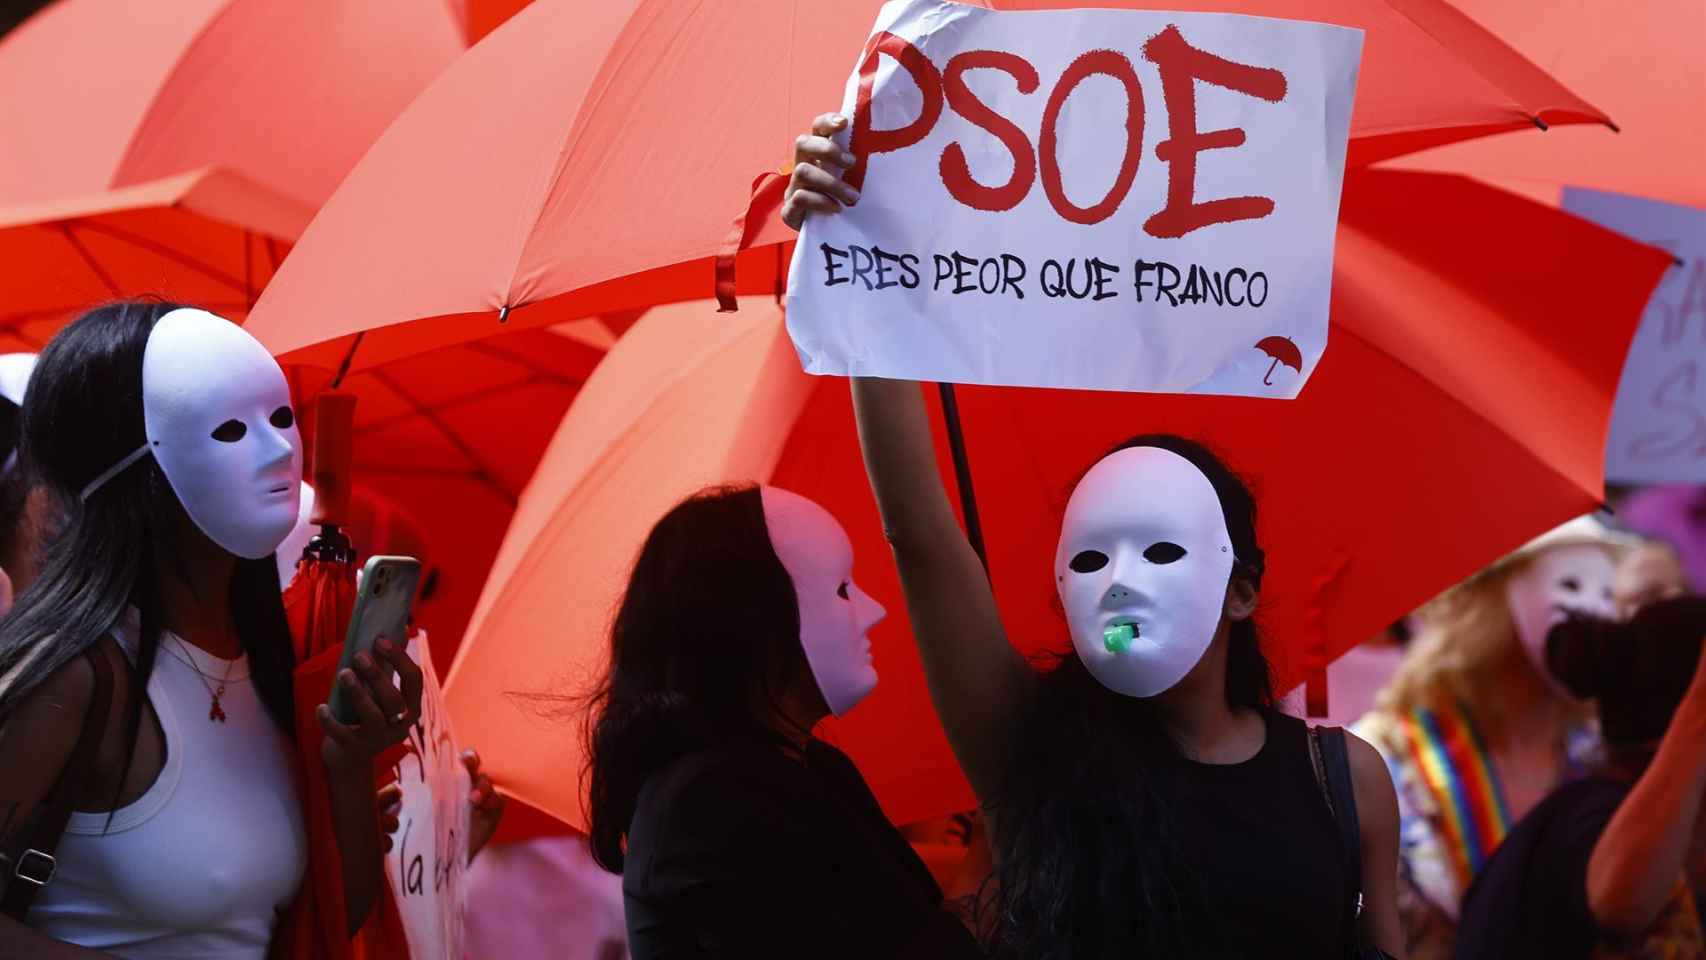 Prostitutas en Ferraz en contra de la ley del PSOE para abolir esta  práctica: &quot;Sois peor que Franco&quot;